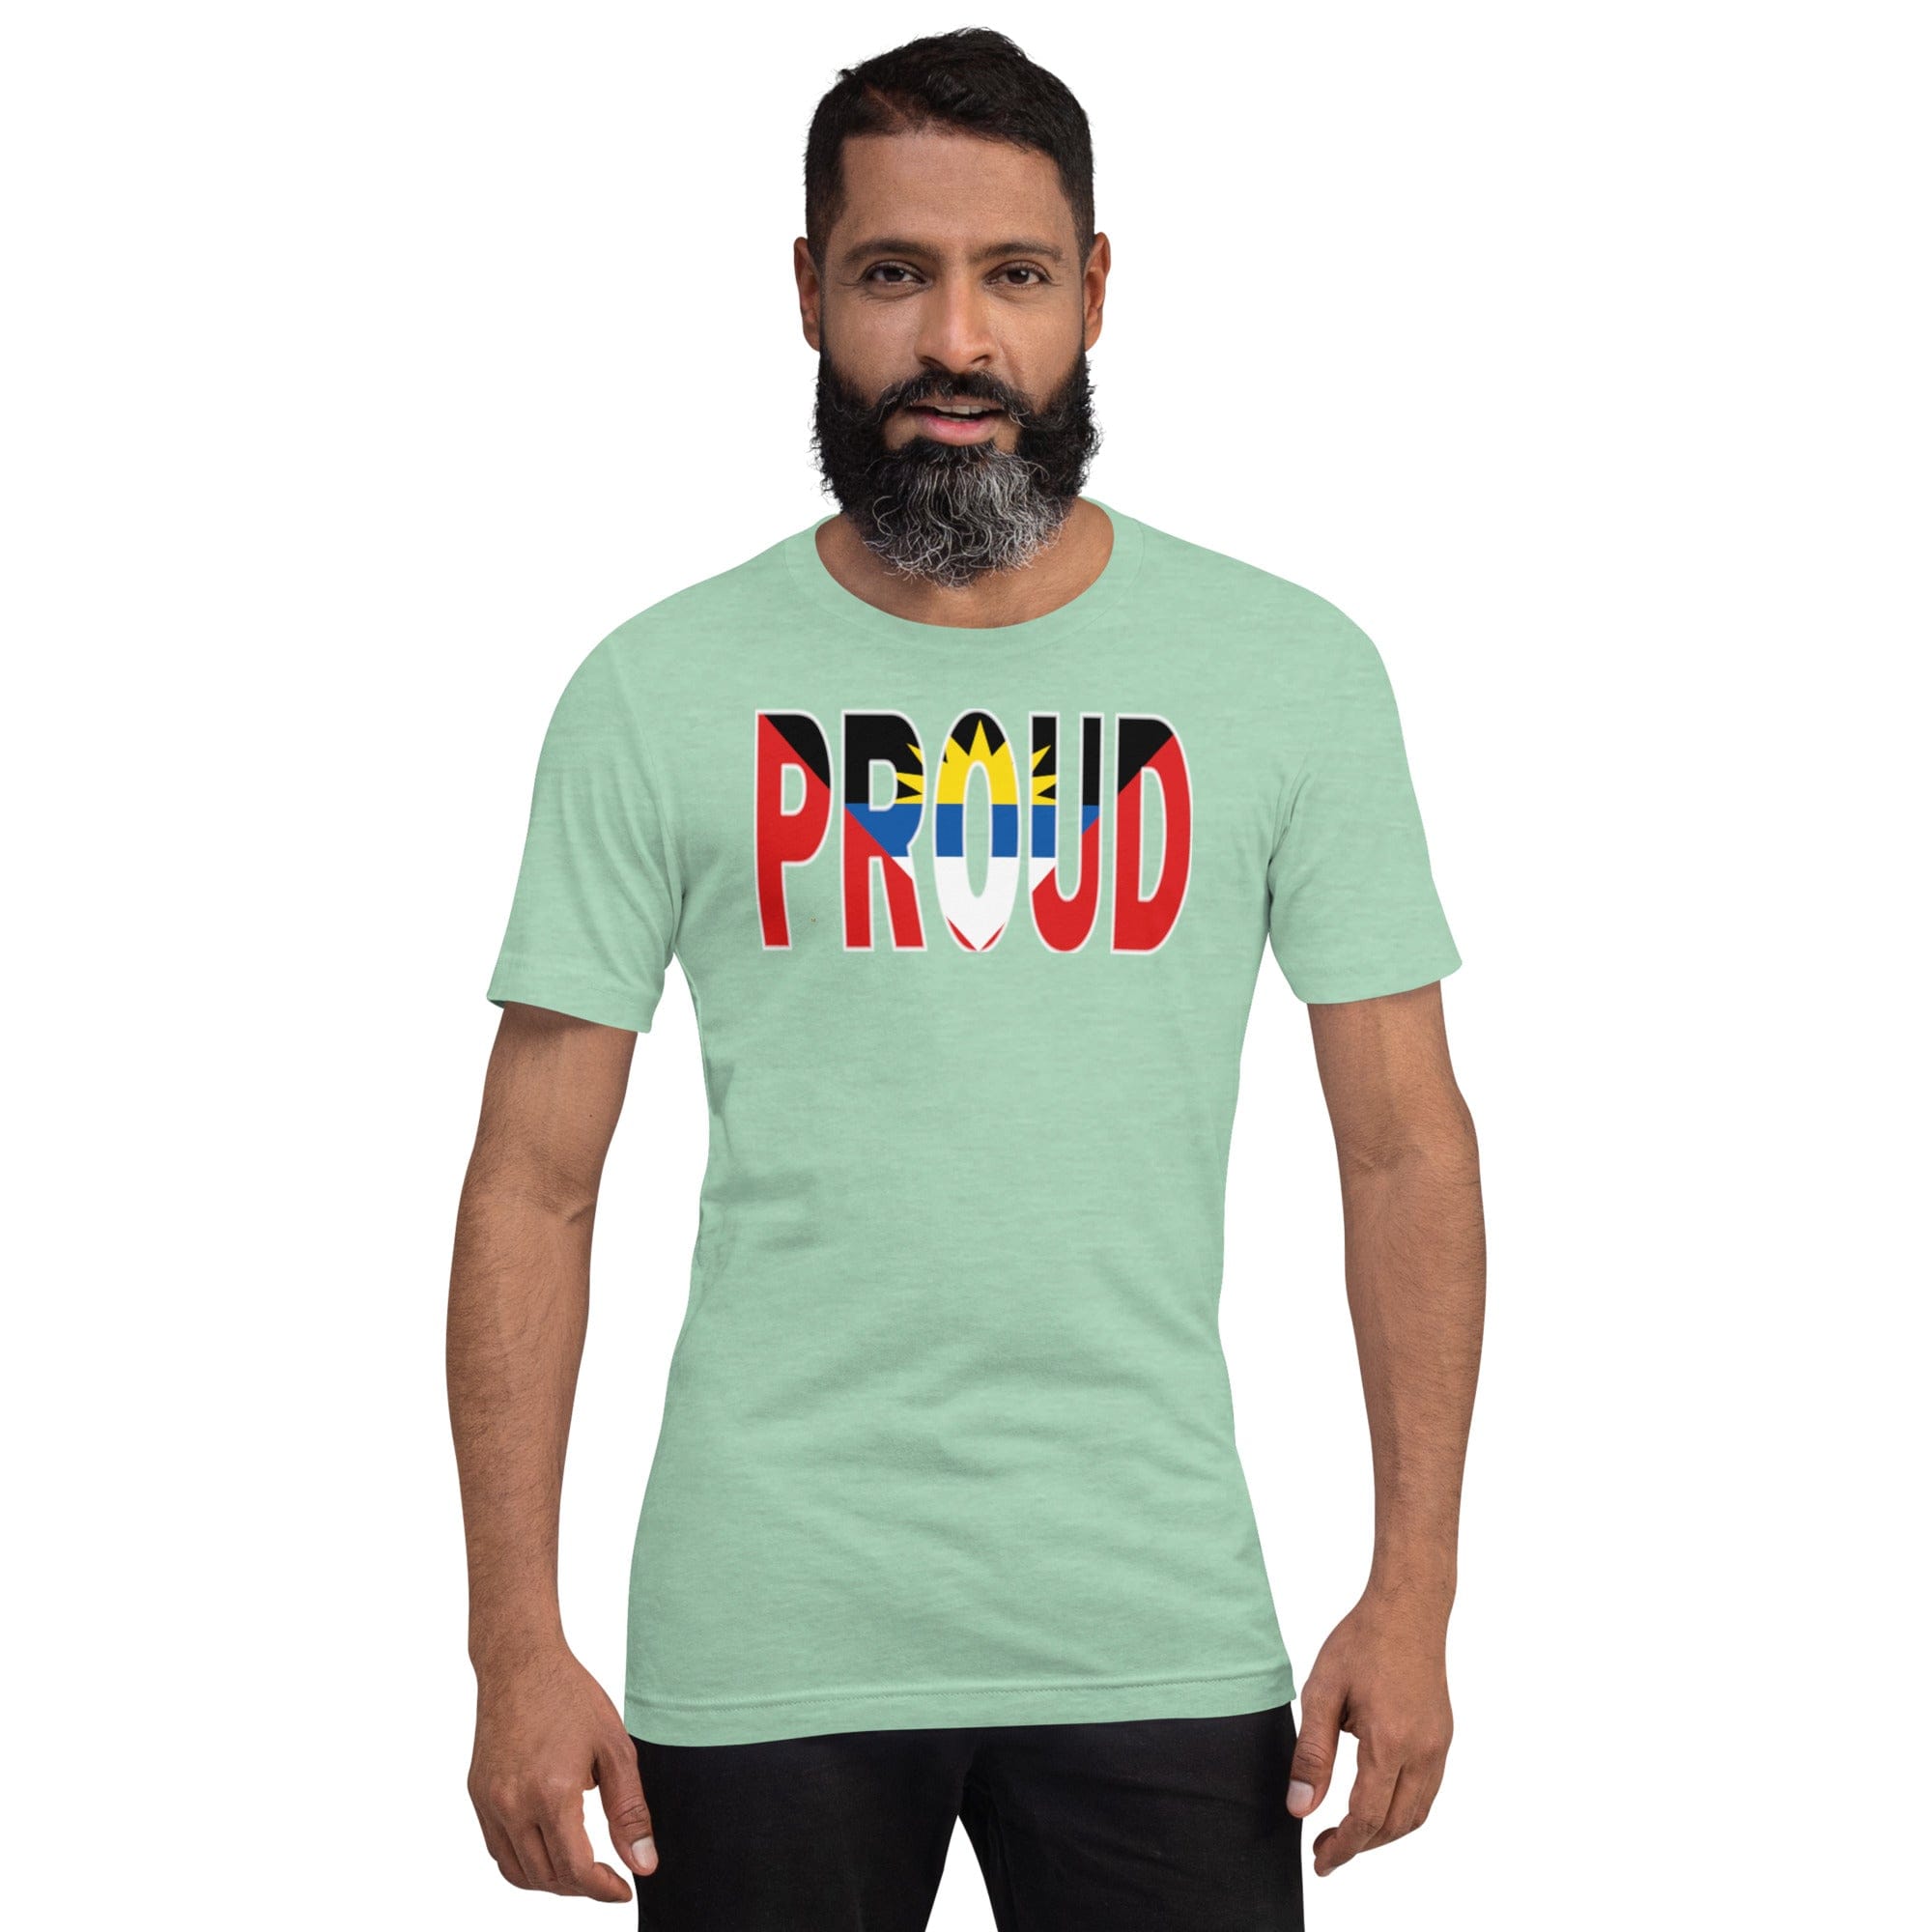 Proud Antigua Flag mint color t-shirt on a black man.